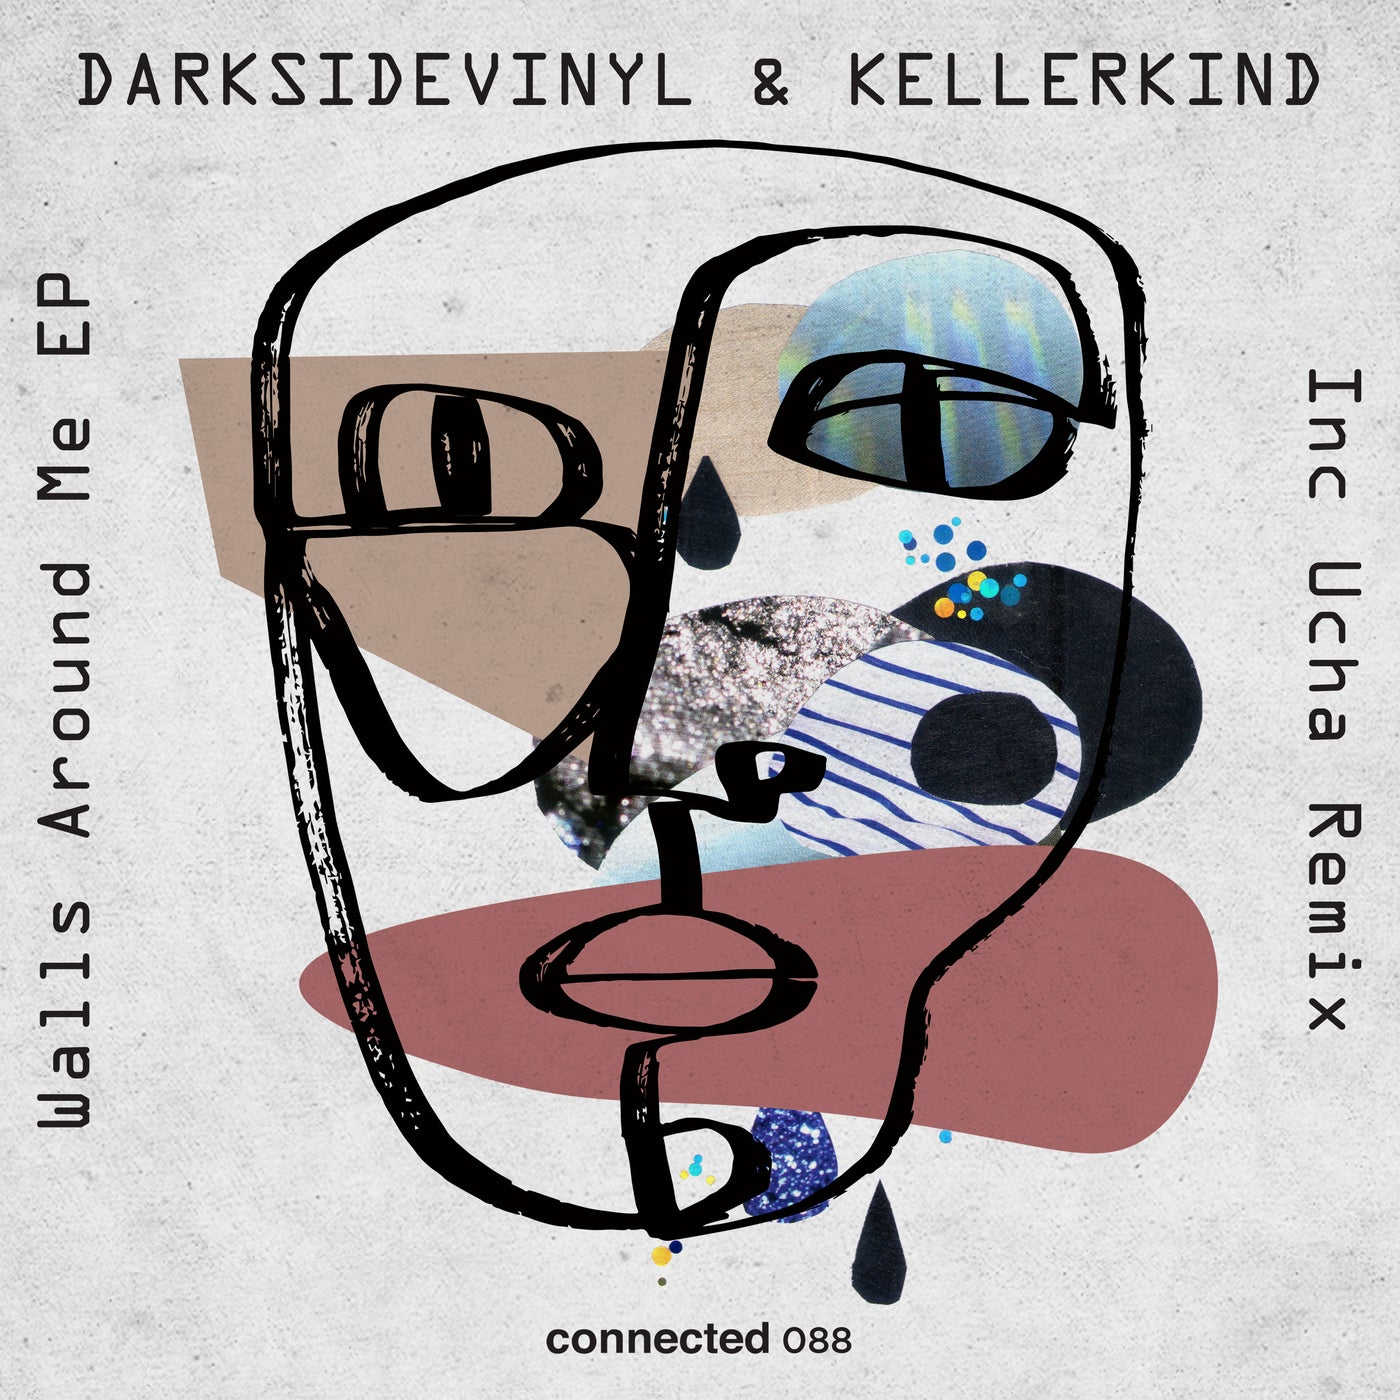 image cover: Kellerkind, Darksidevinyl - Walls Around Me EP / CONNECTED088